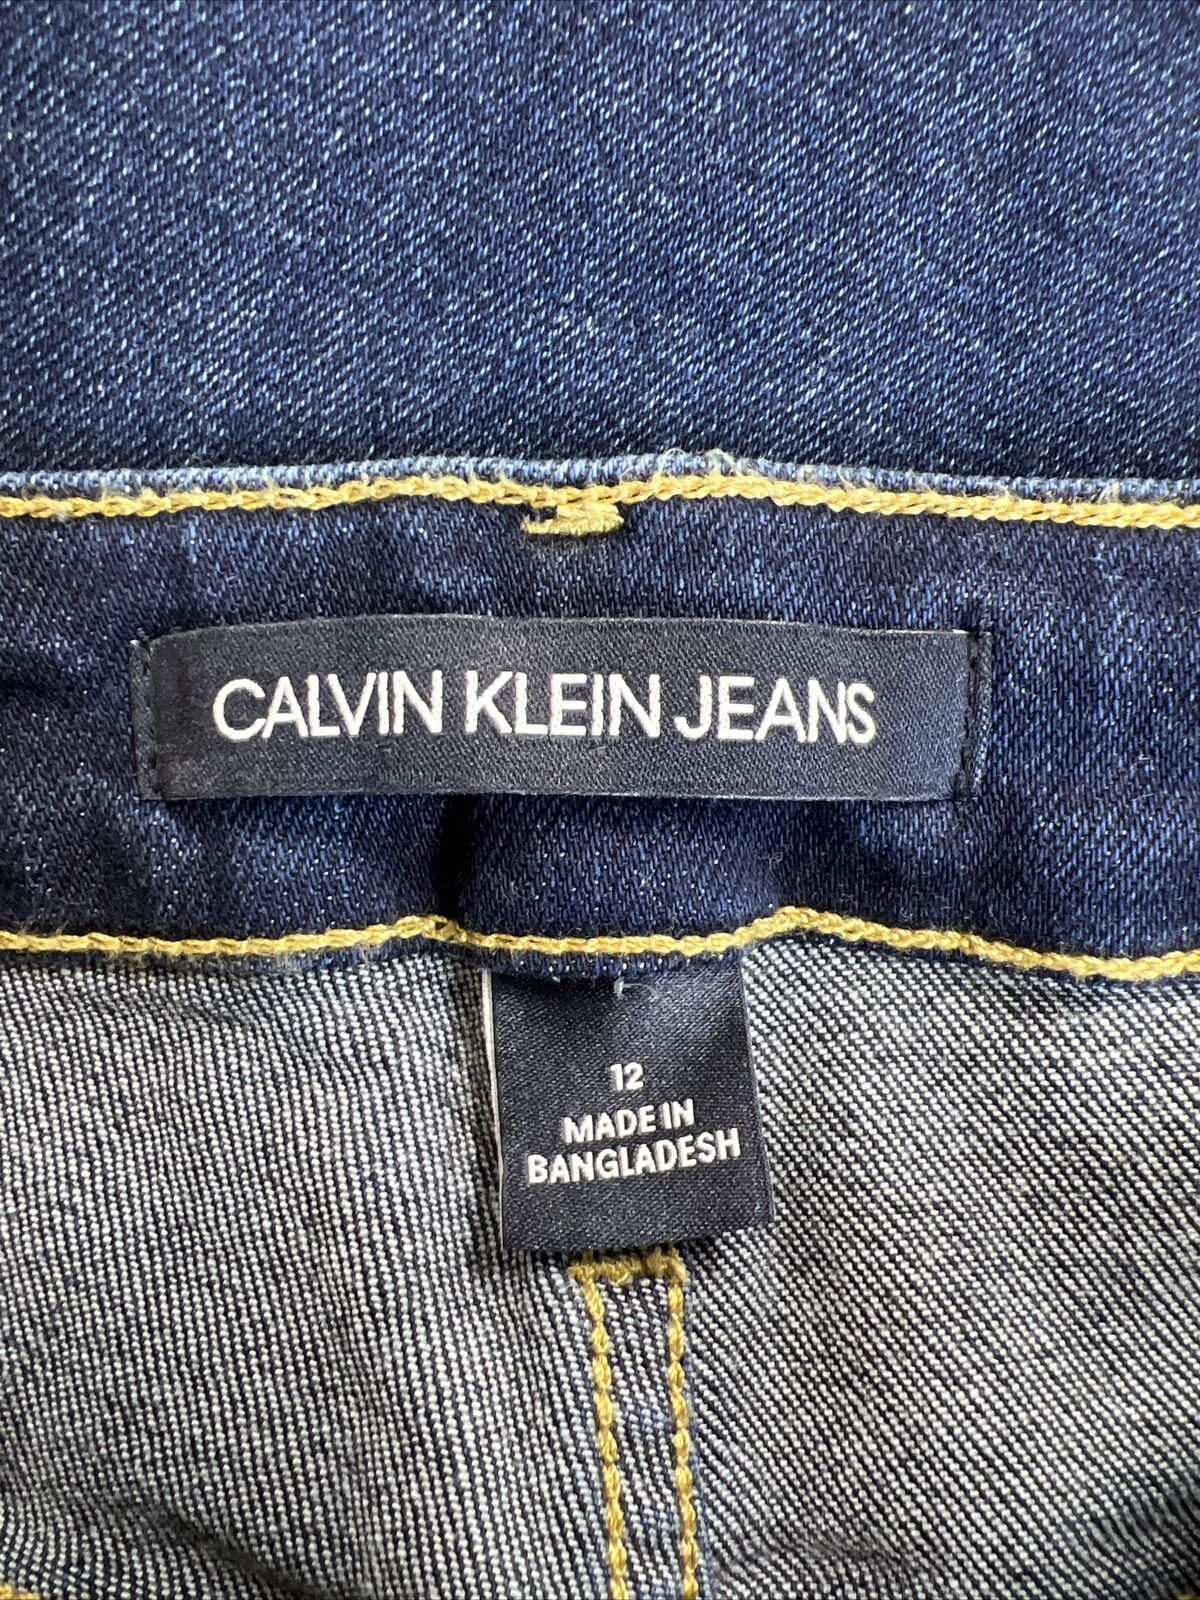 Calvin Klein Women's Dark Wash Cut Off Denim Jean Shorts - 12